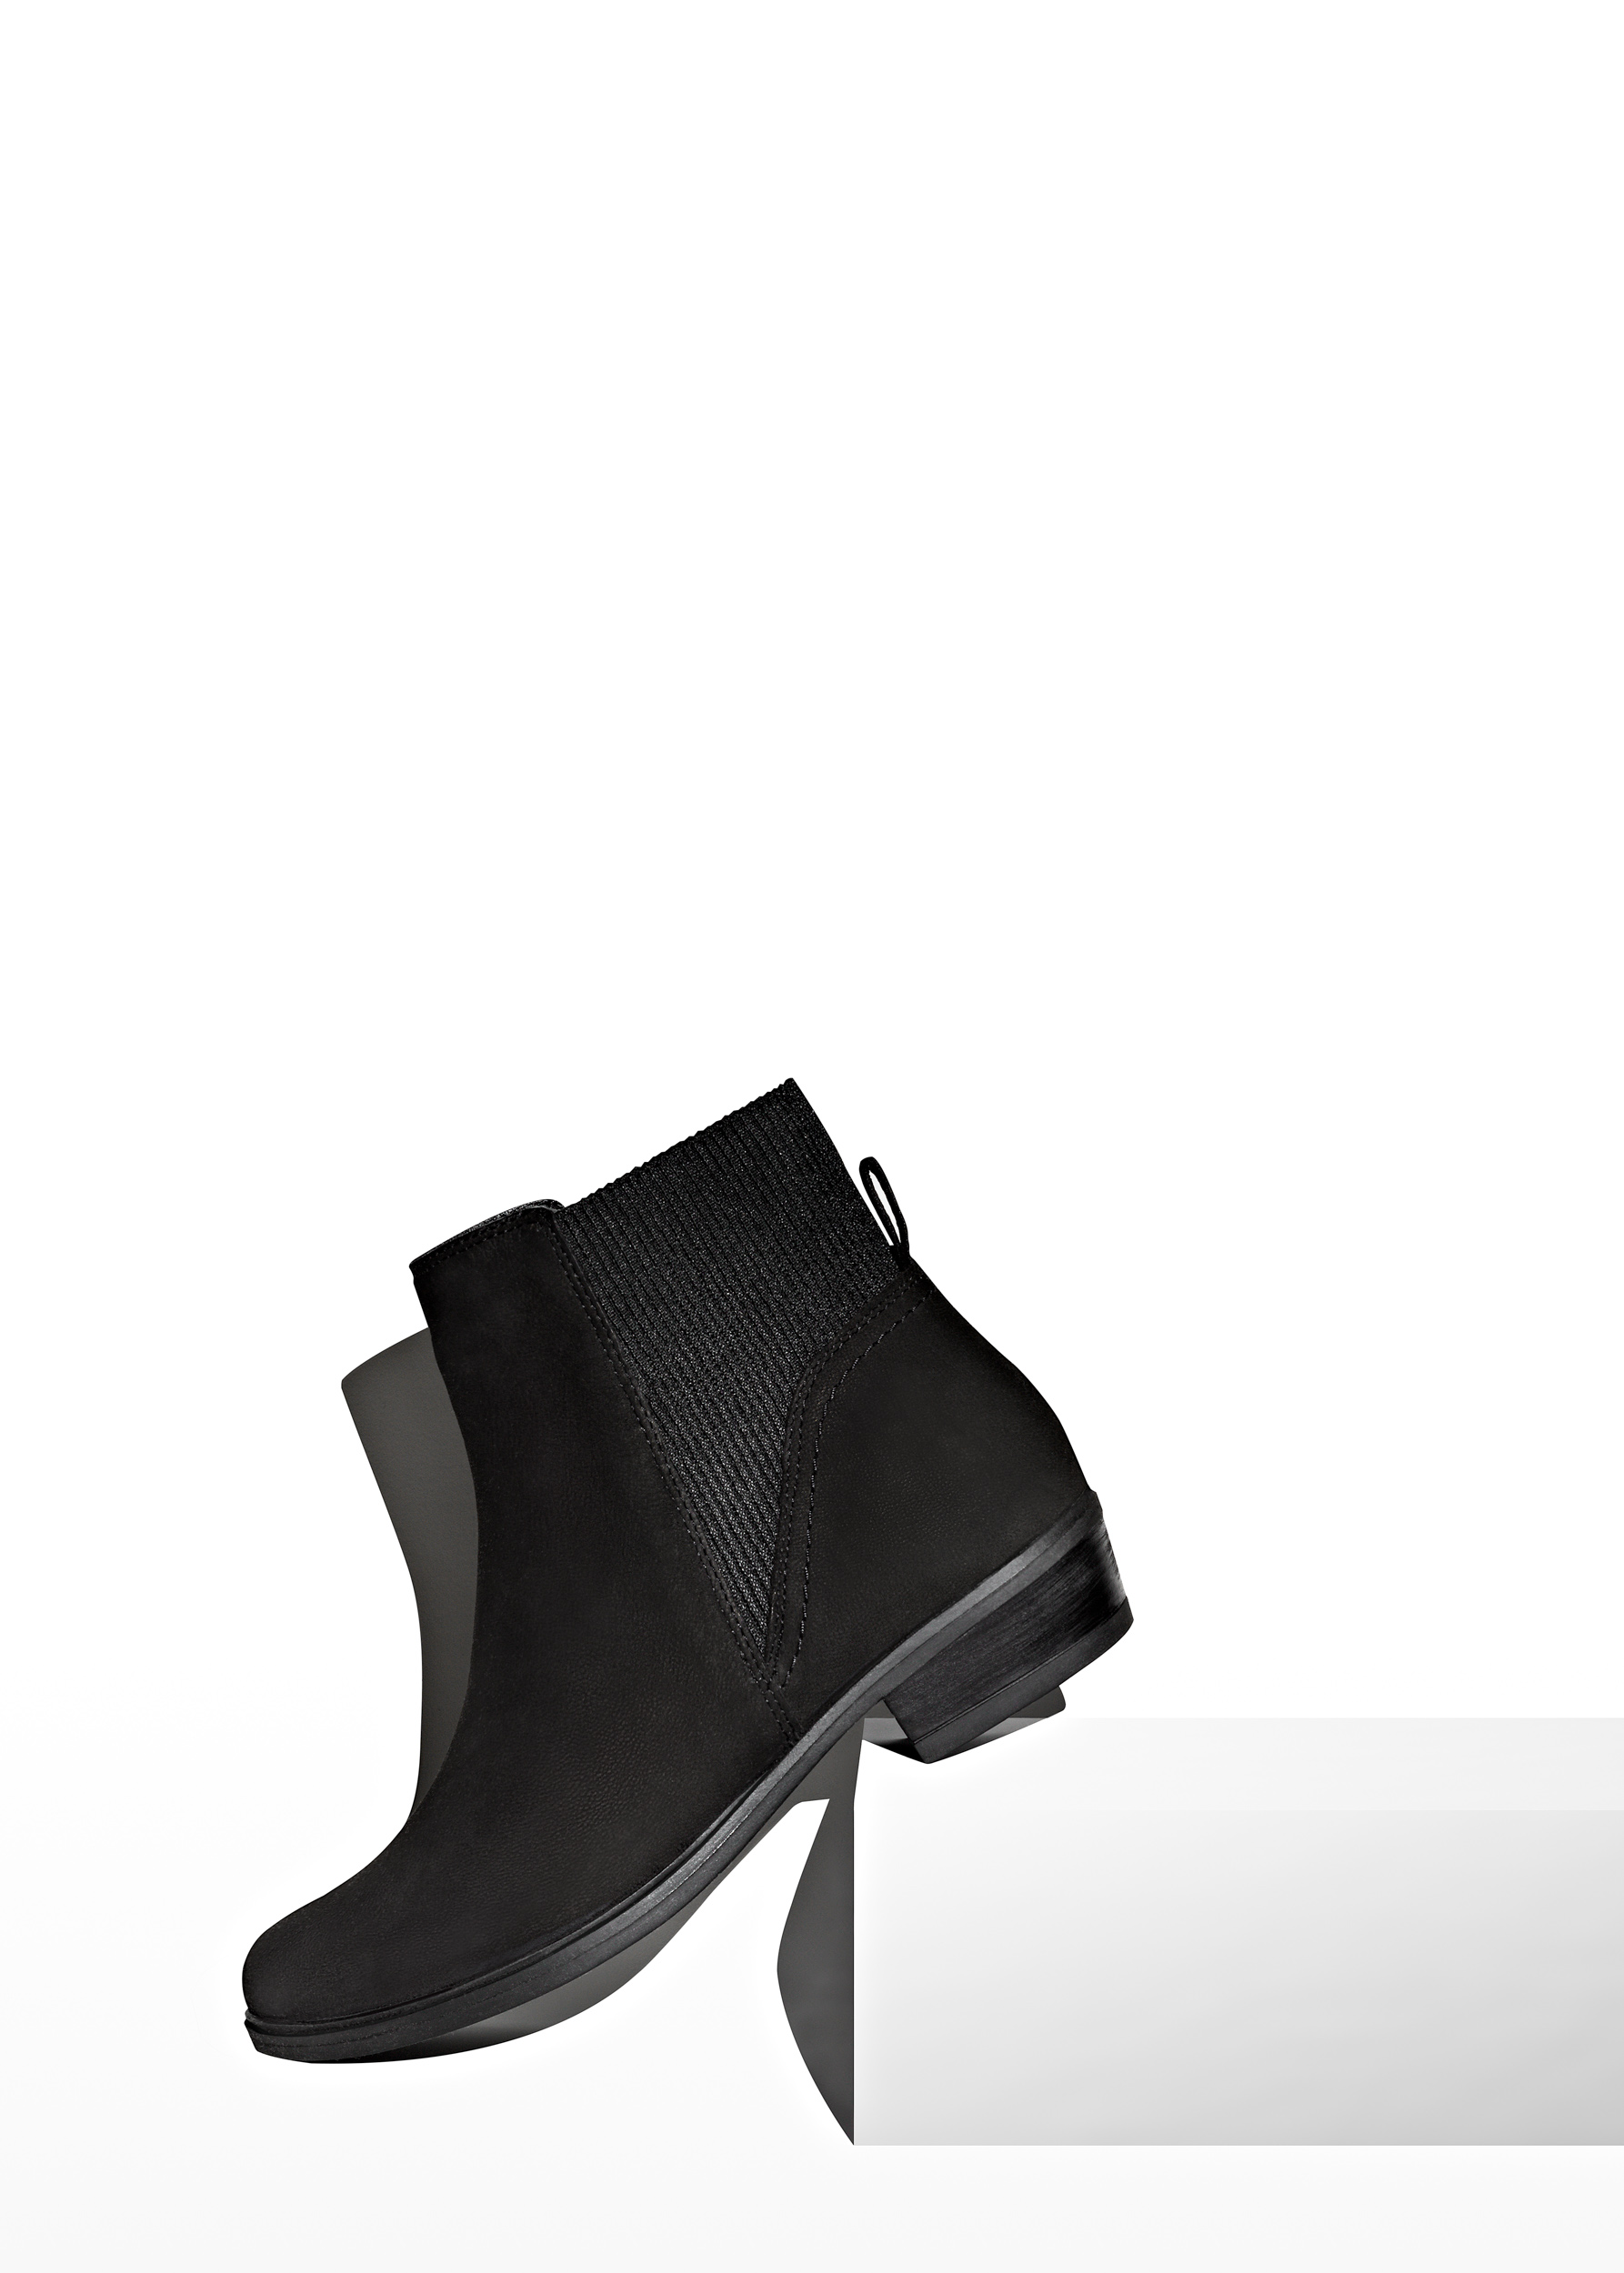 Black Suede Women's Chelsea Boot | Commercial Product Shot 